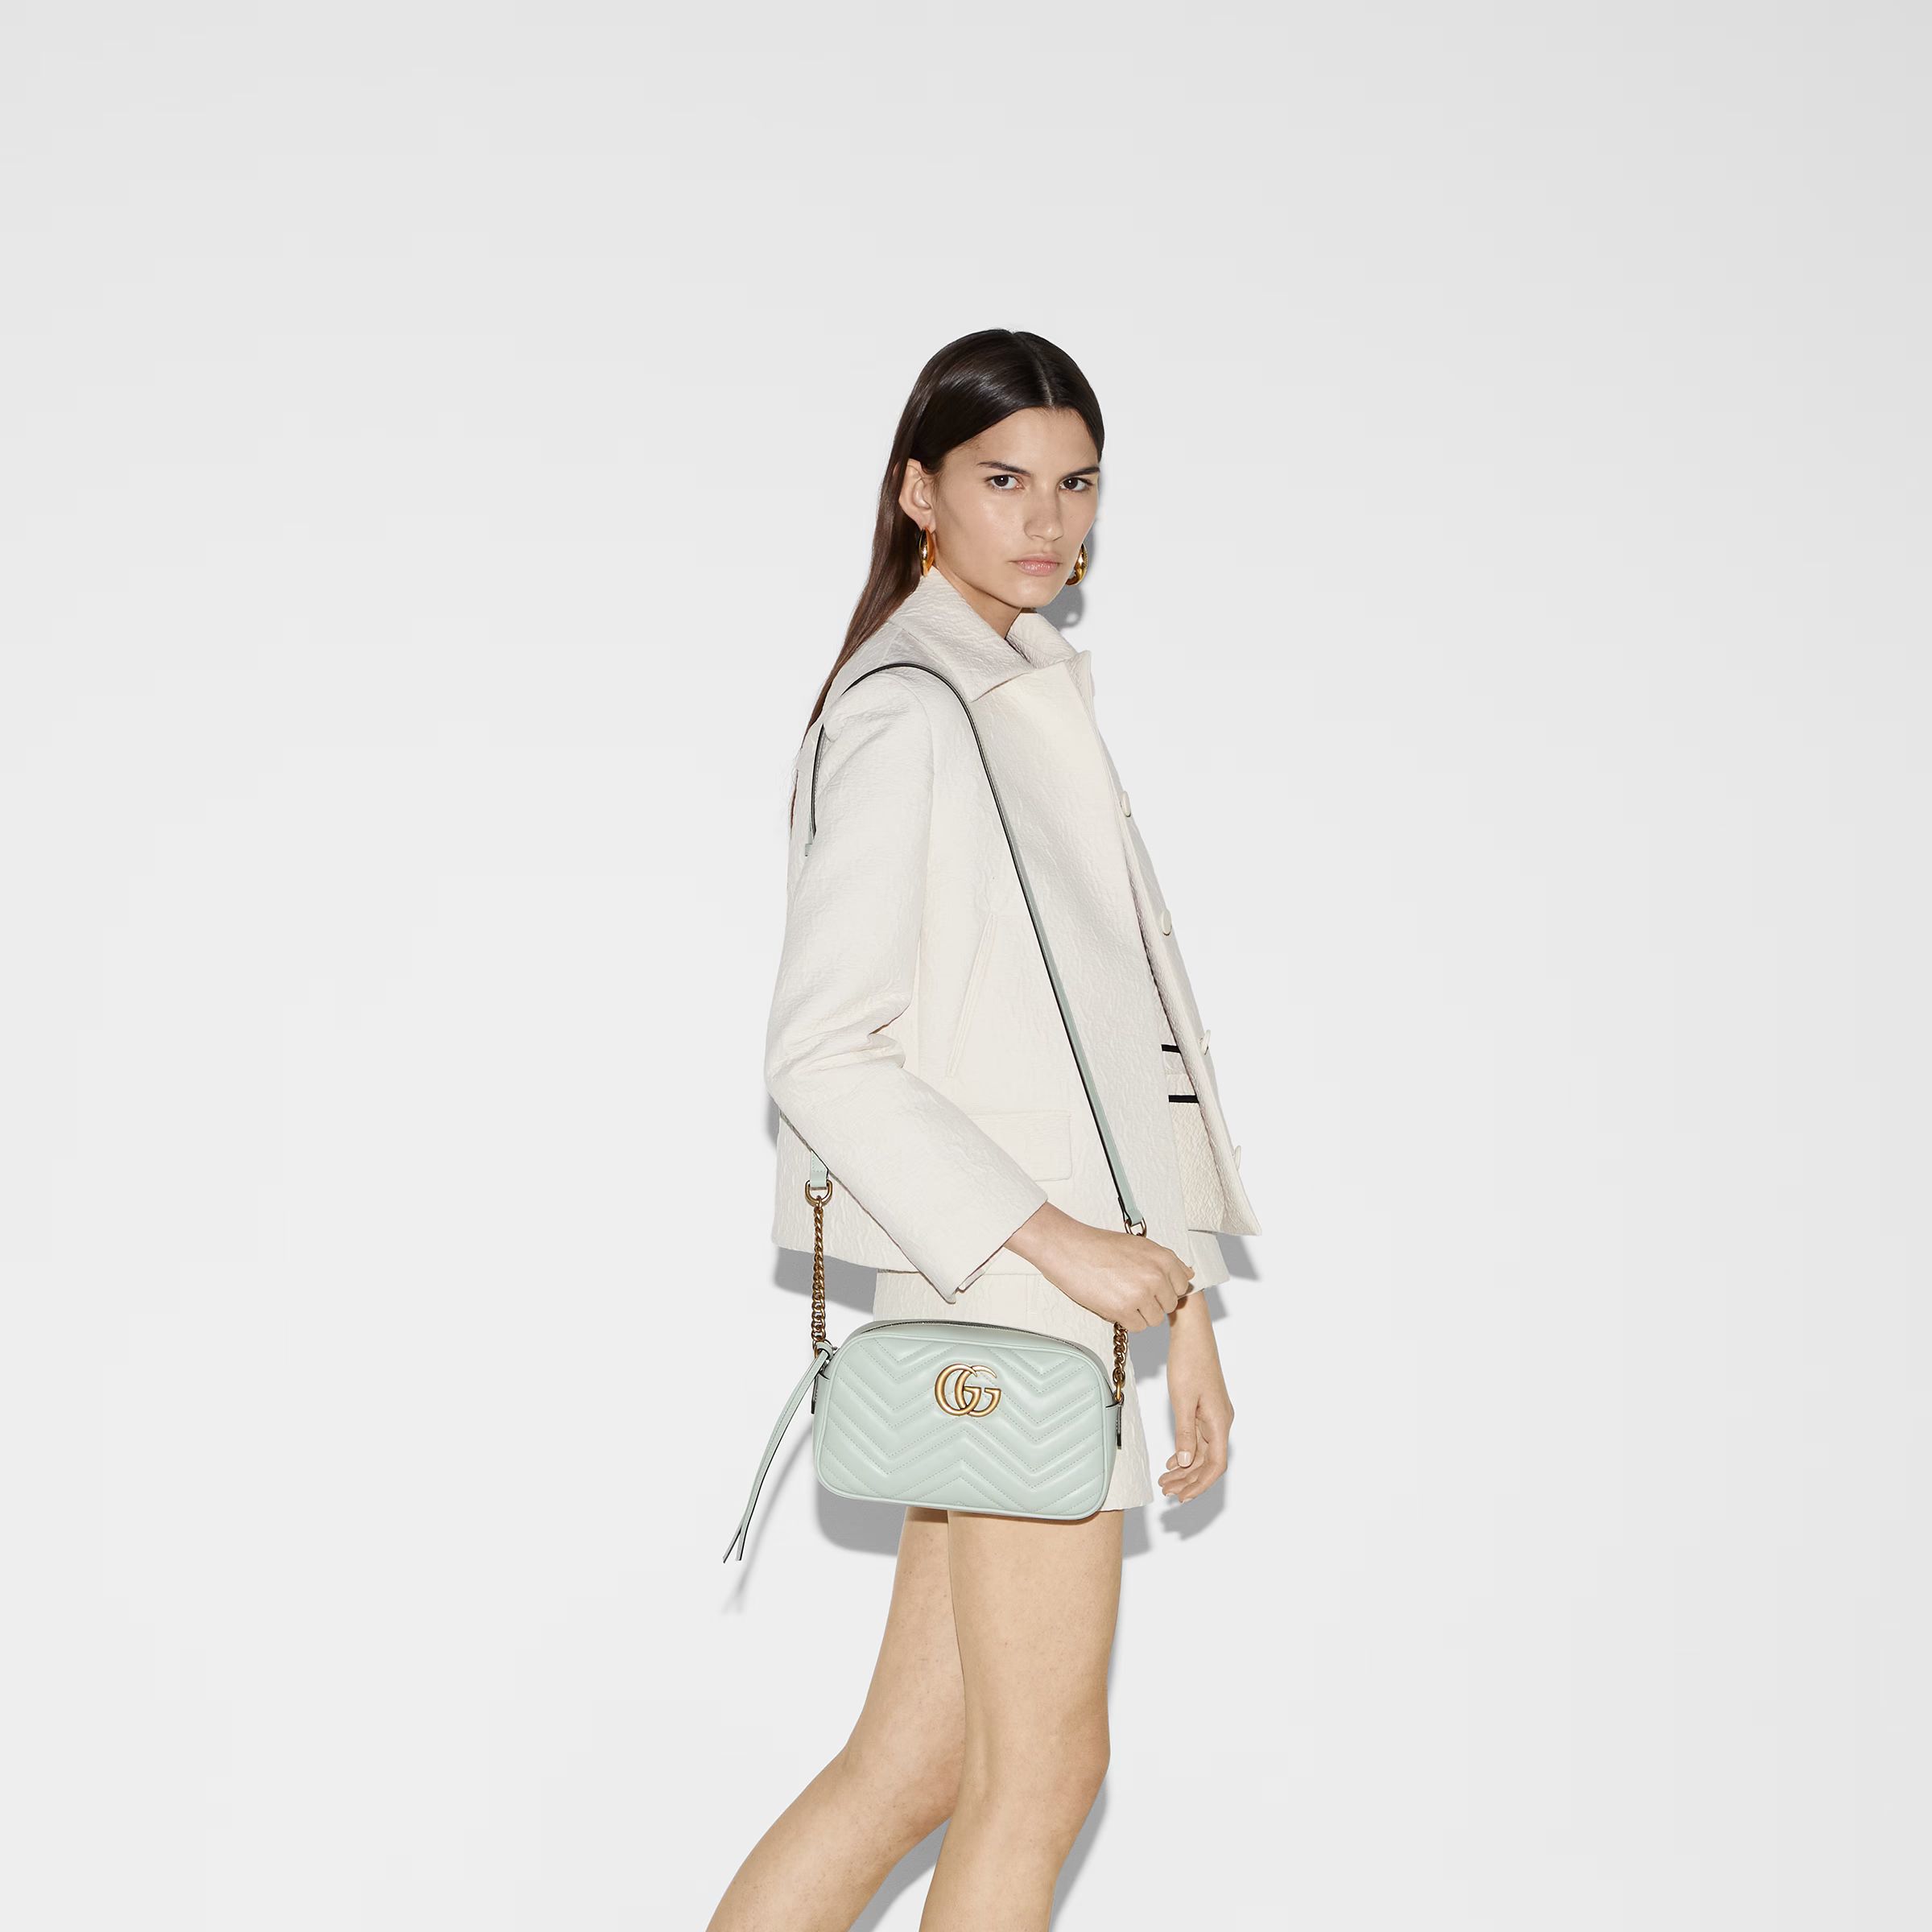 GG Marmont small shoulder bag | Gucci (UK)